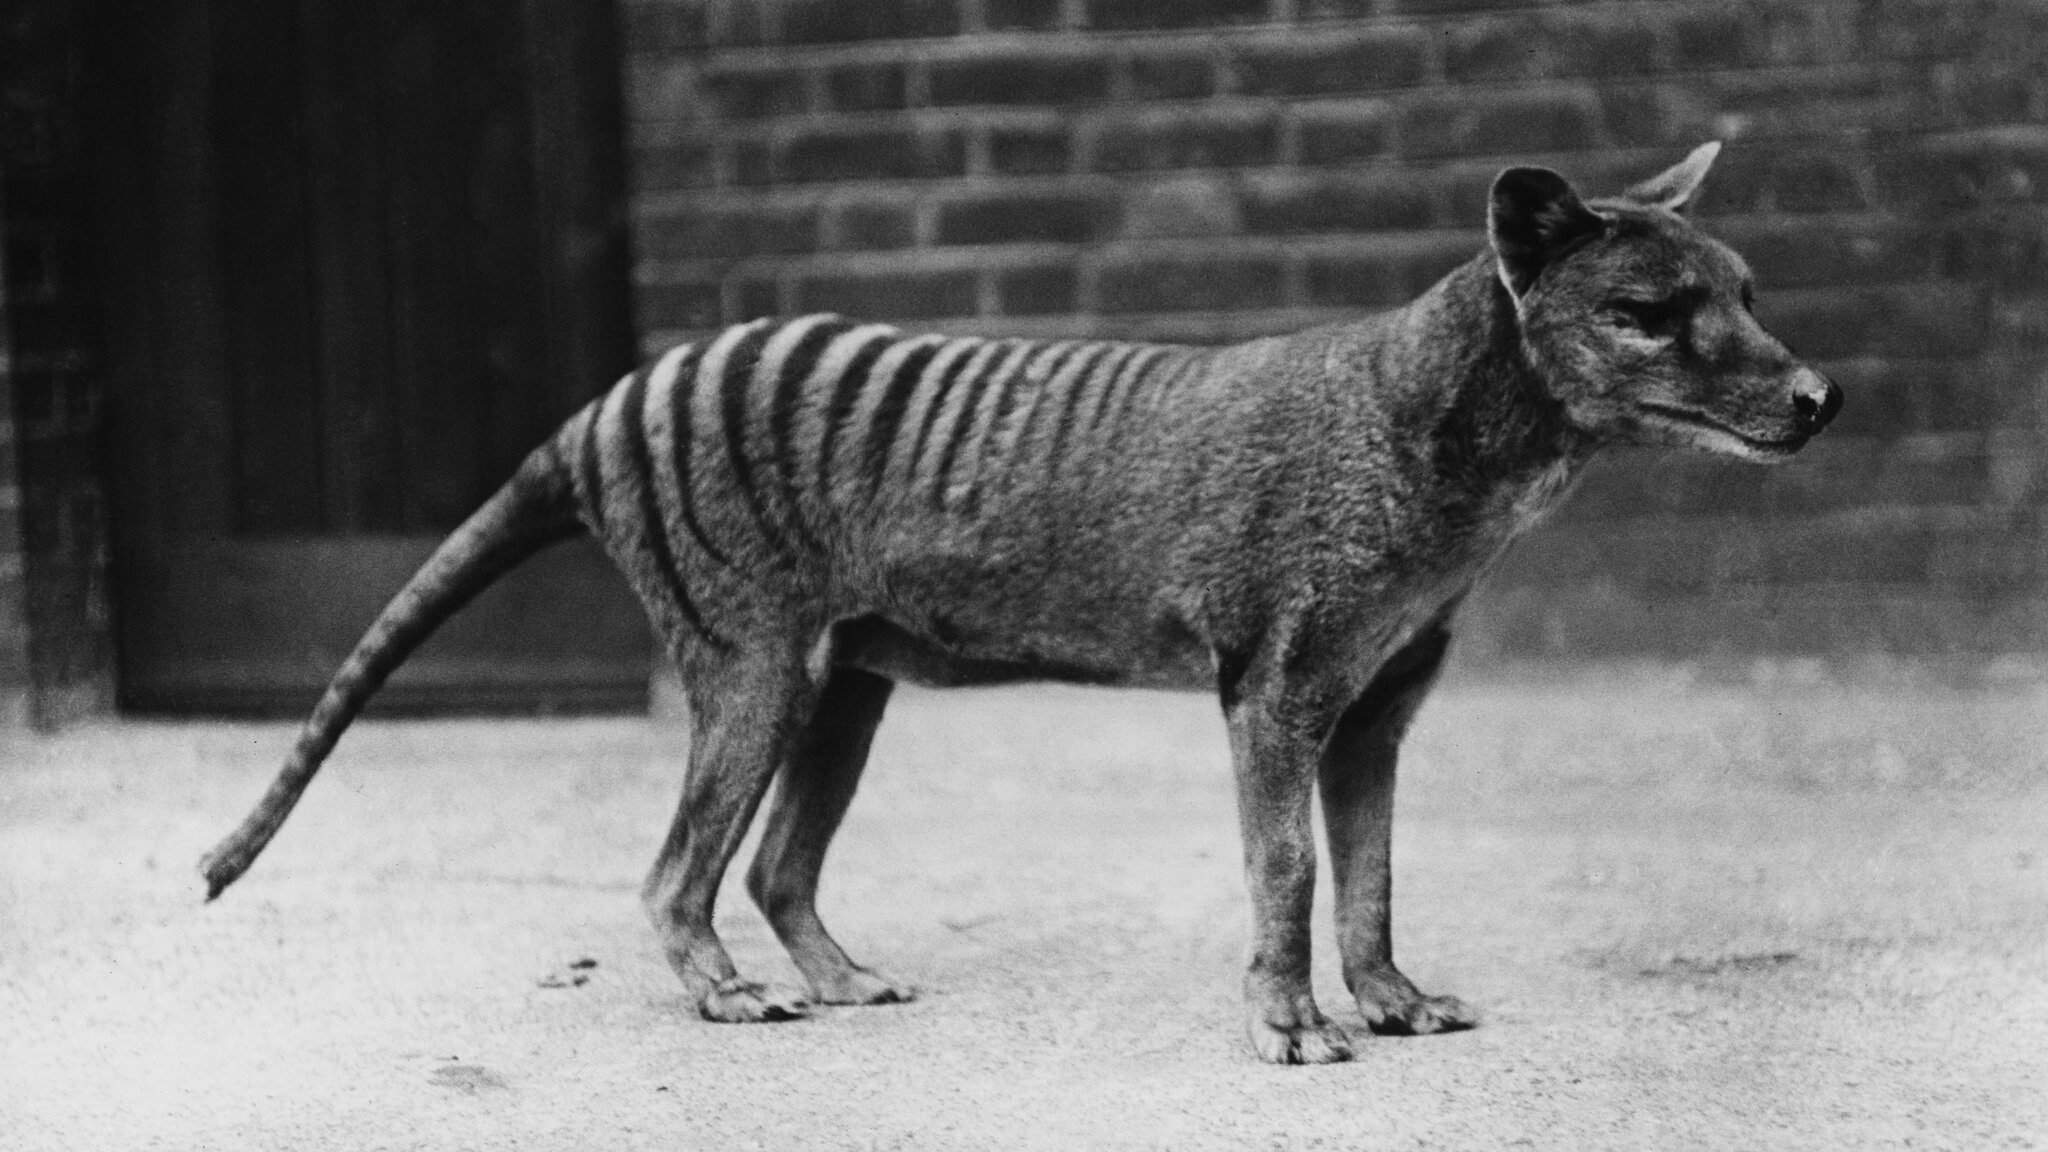 Scientists want to resurrect the extinct Tasmanian tiger